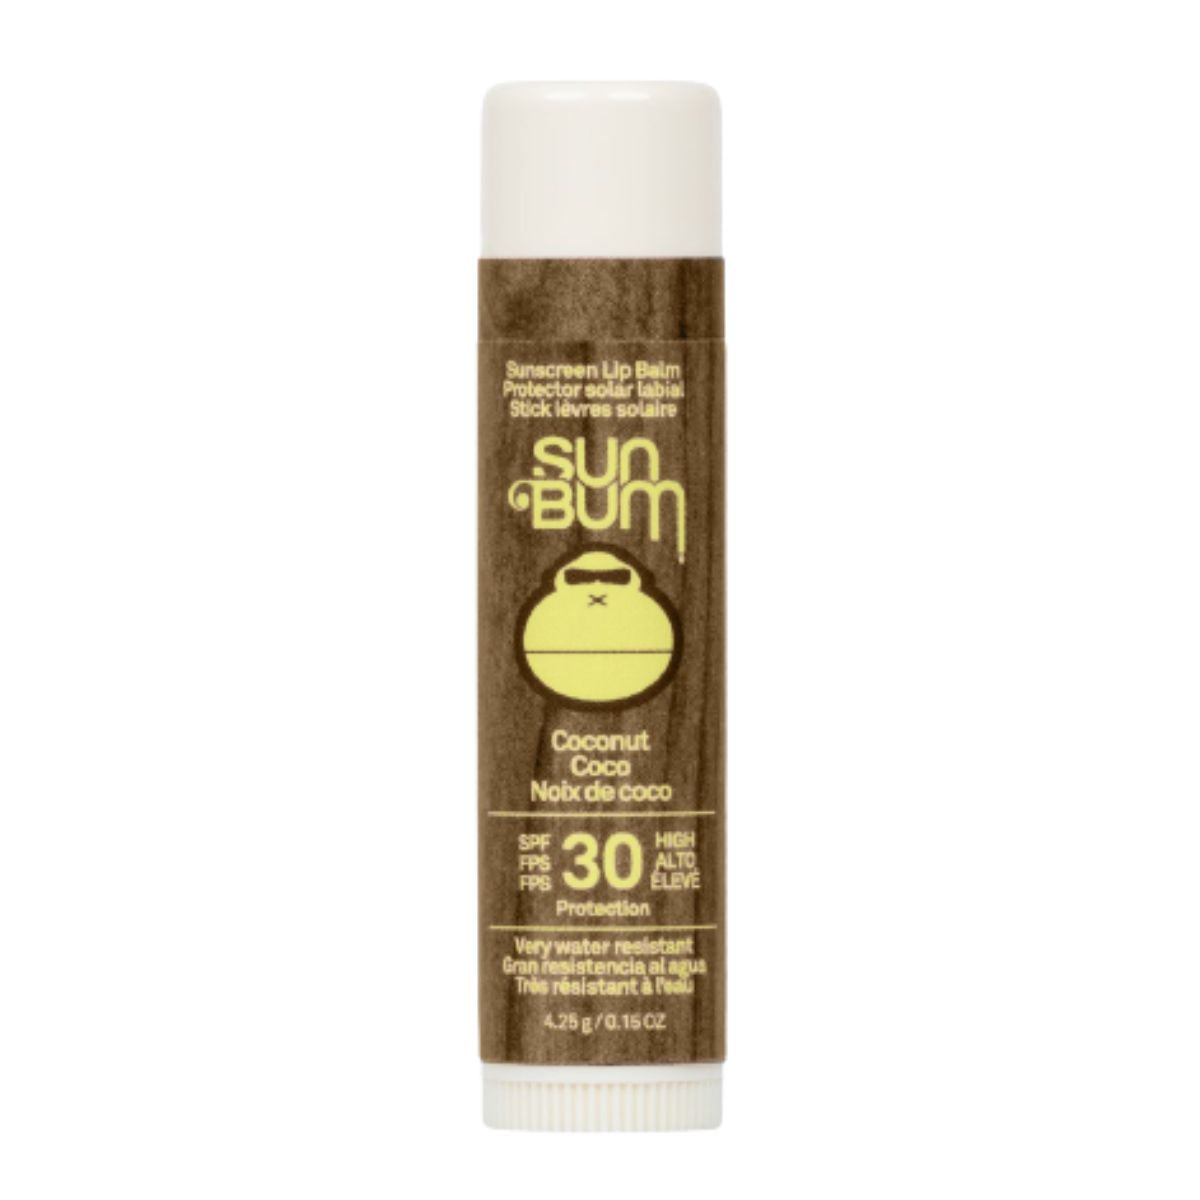 Sun Bum Original SPF 30 Lip Balm Coconut